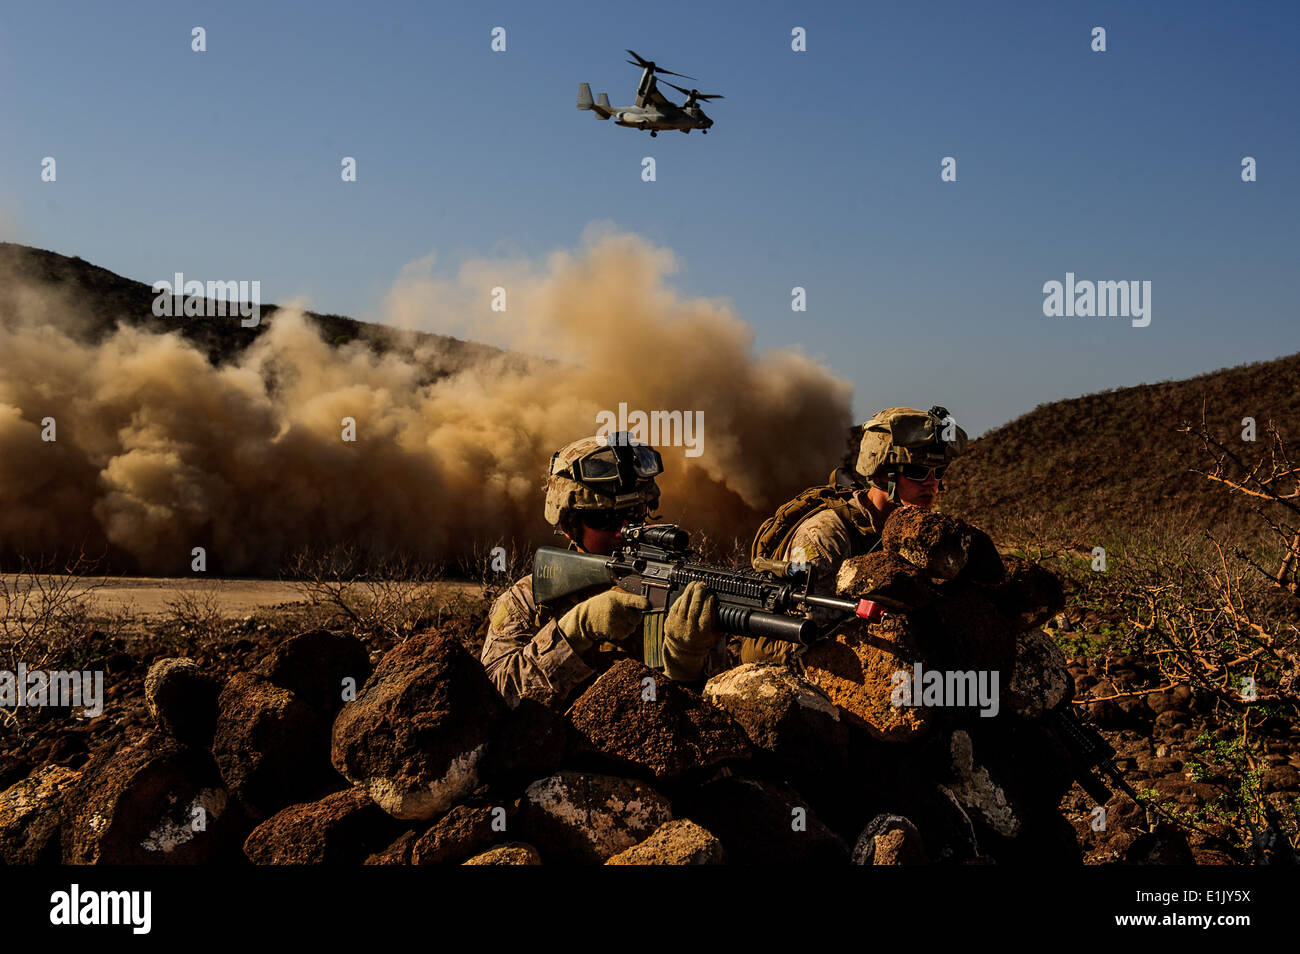 U.S. Marines with Battalion Landing Team 1/4 (BLT), 13th Marine Expeditionary Unit (MEU) post security while a MV-22 Osprey tak Stock Photo